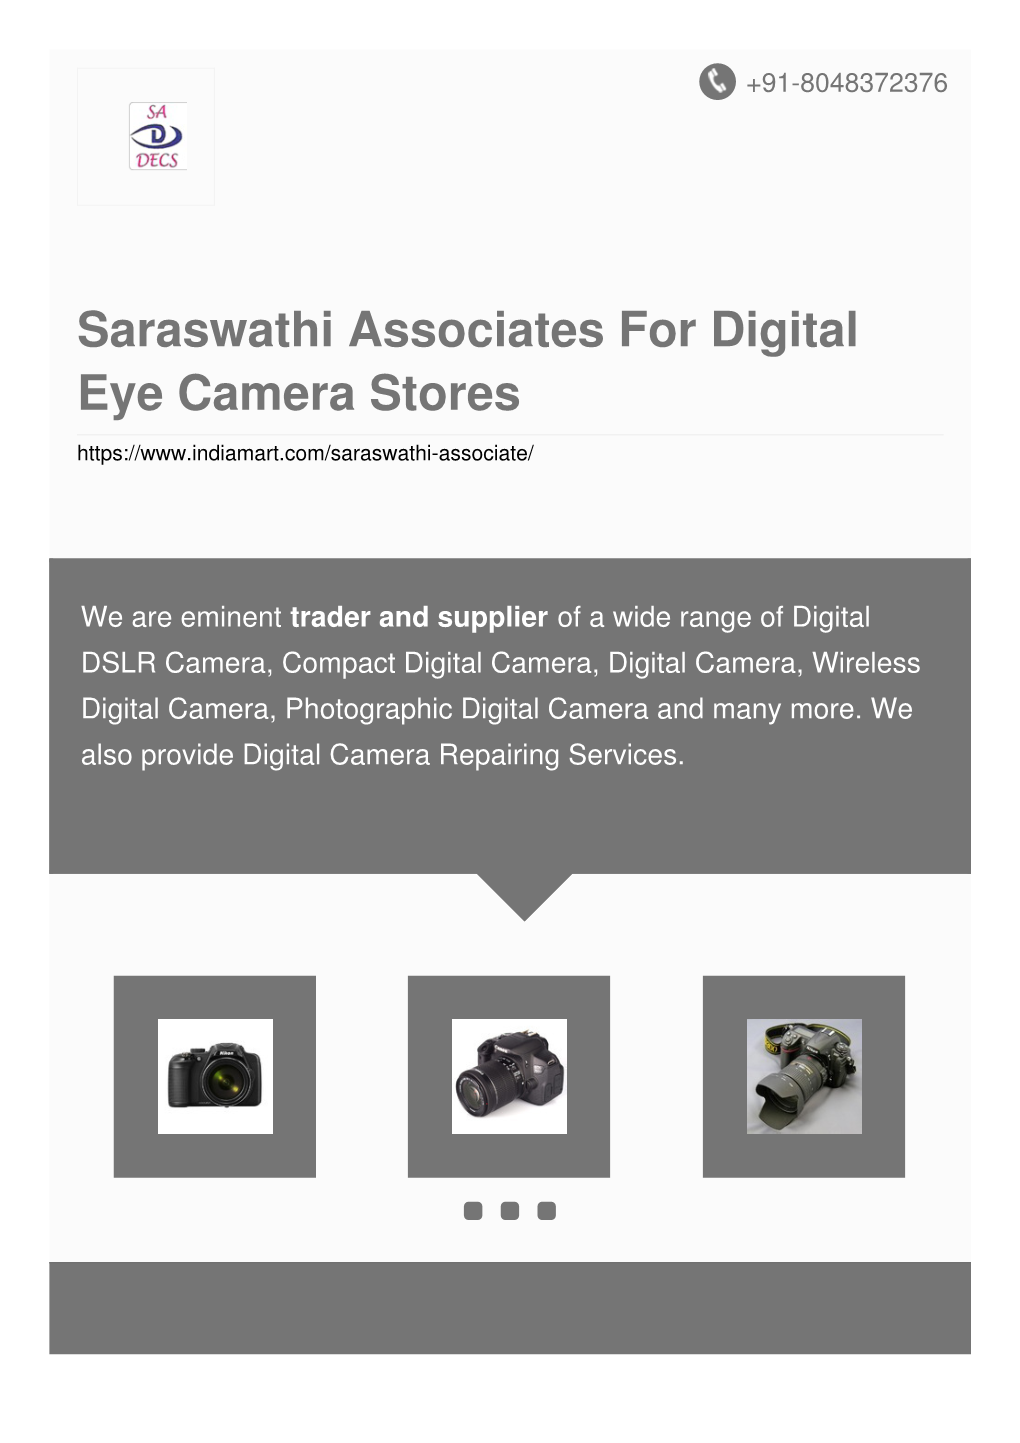 Saraswathi Associates for Digital Eye Camera Stores